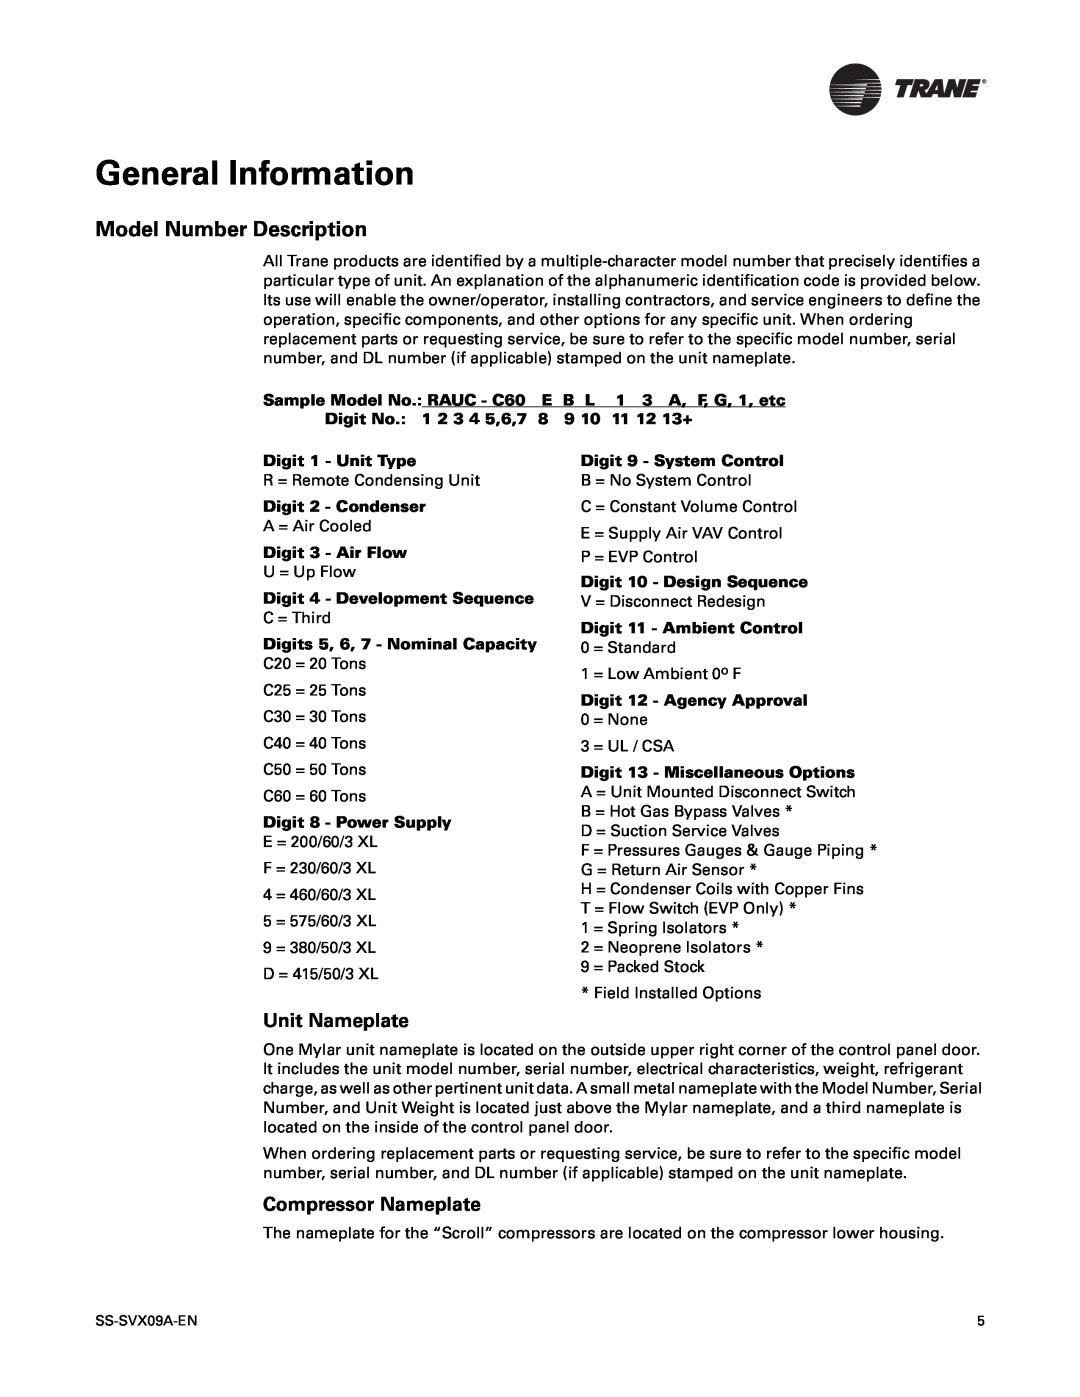 Trane RAUC-C25, RAUC-C50, RAUC-C30 manual General Information, Model Number Description, Unit Nameplate, Compressor Nameplate 